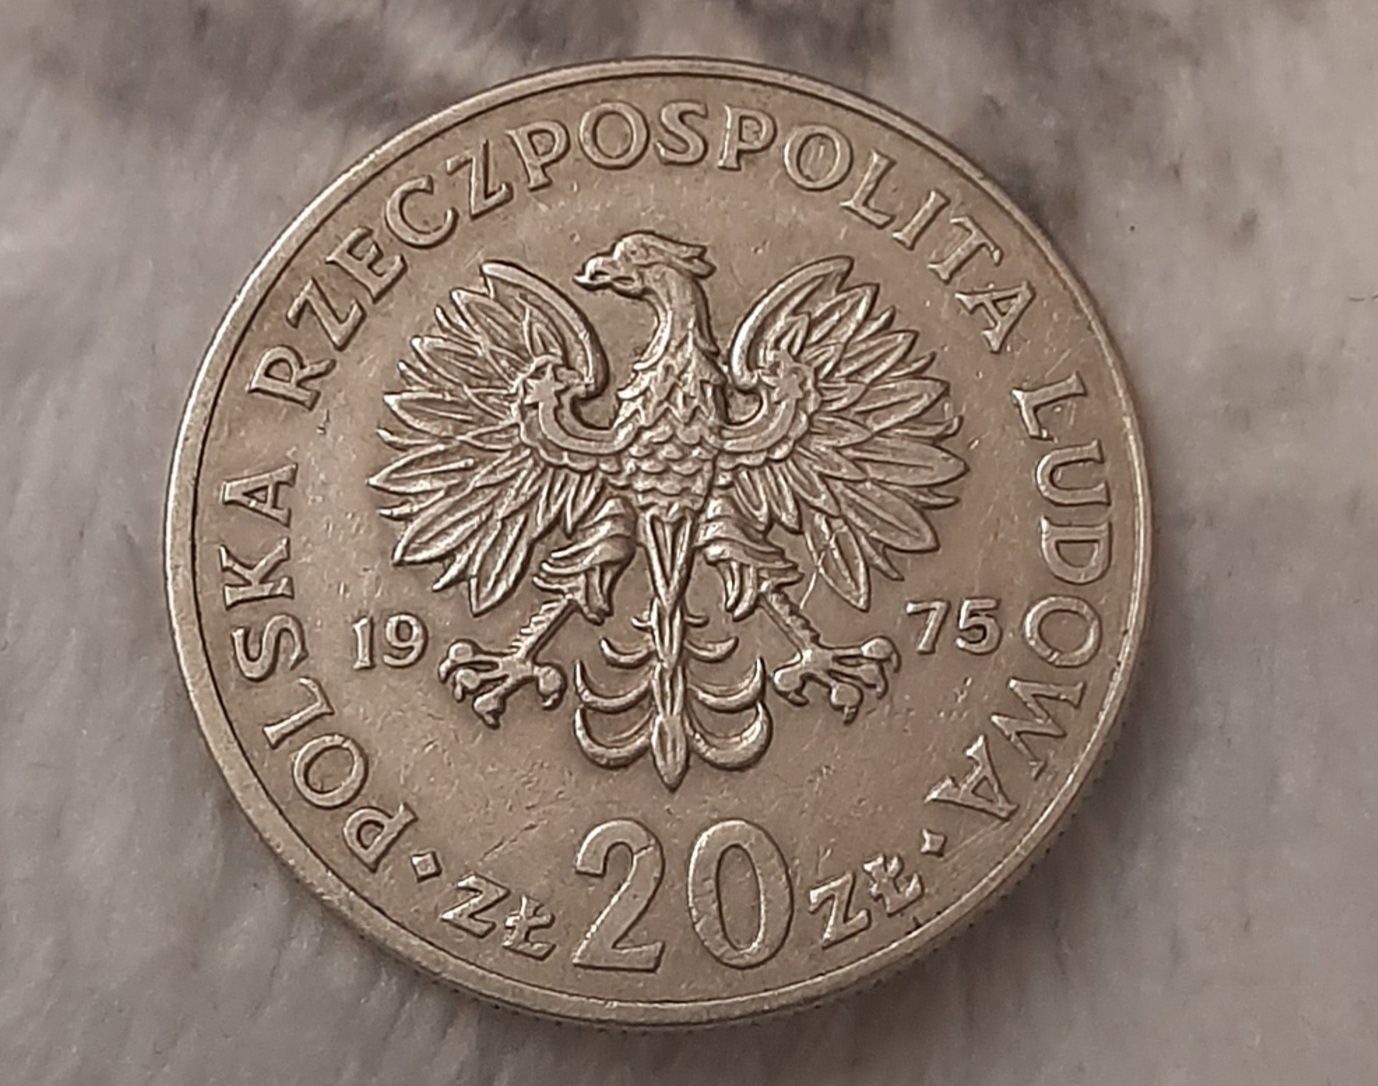 Moneta 20 zł z 1975r